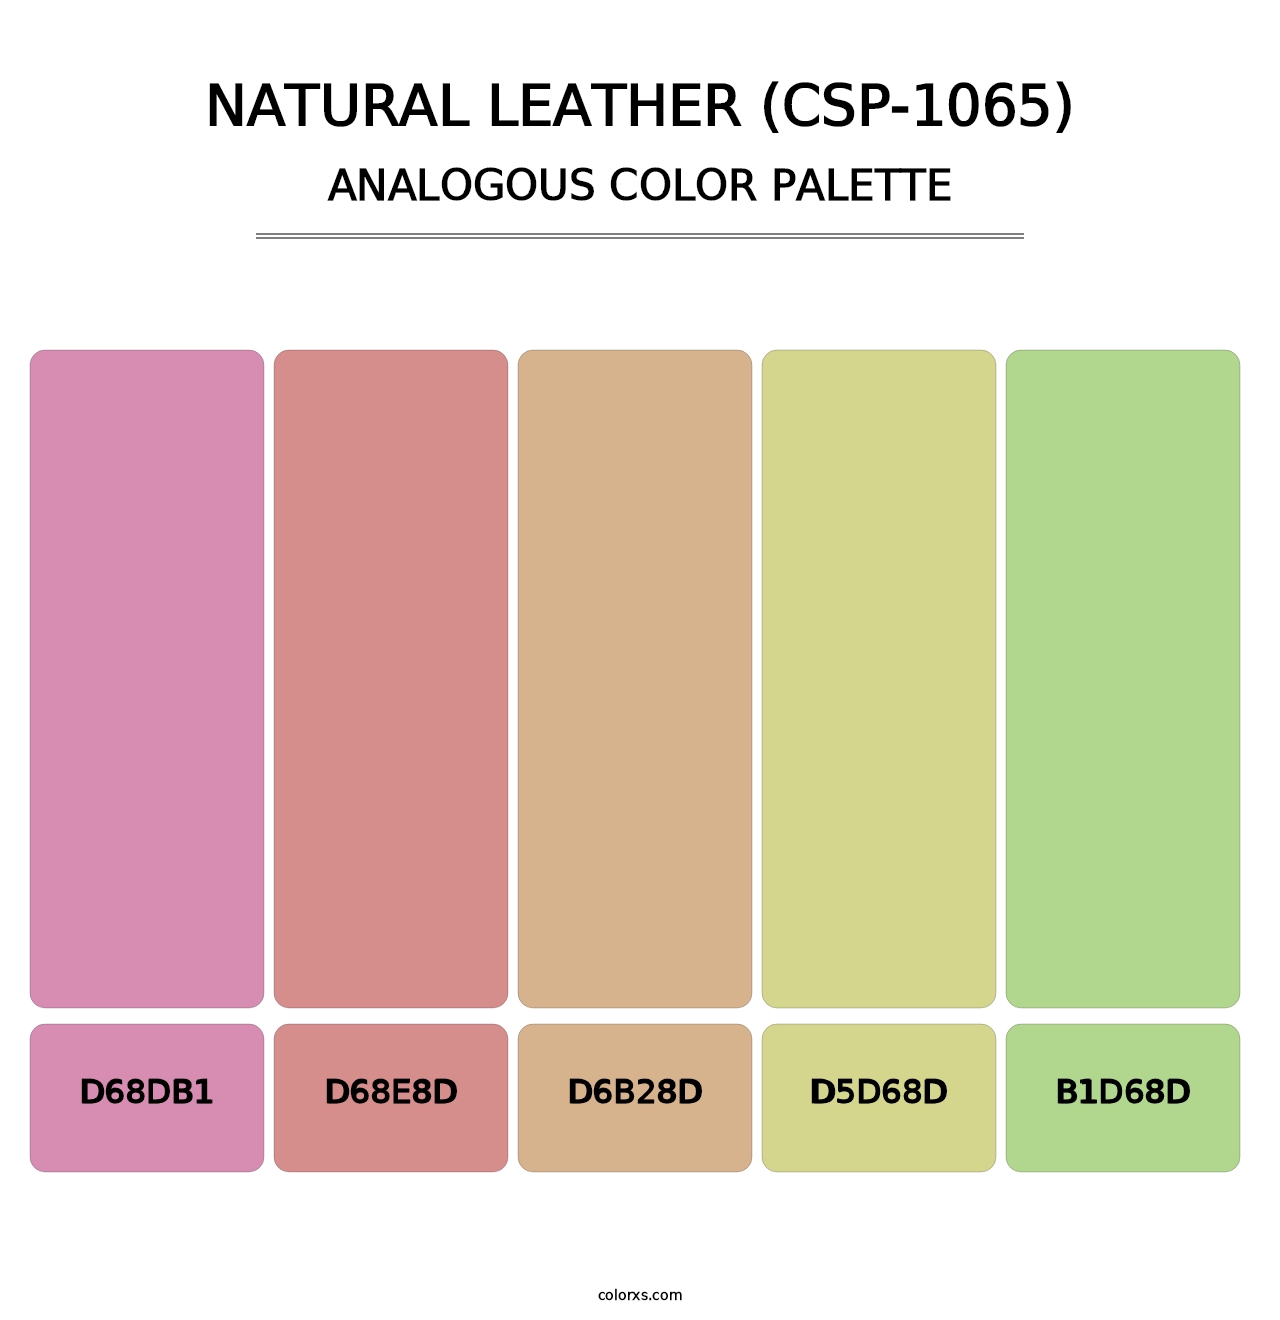 Natural Leather (CSP-1065) - Analogous Color Palette